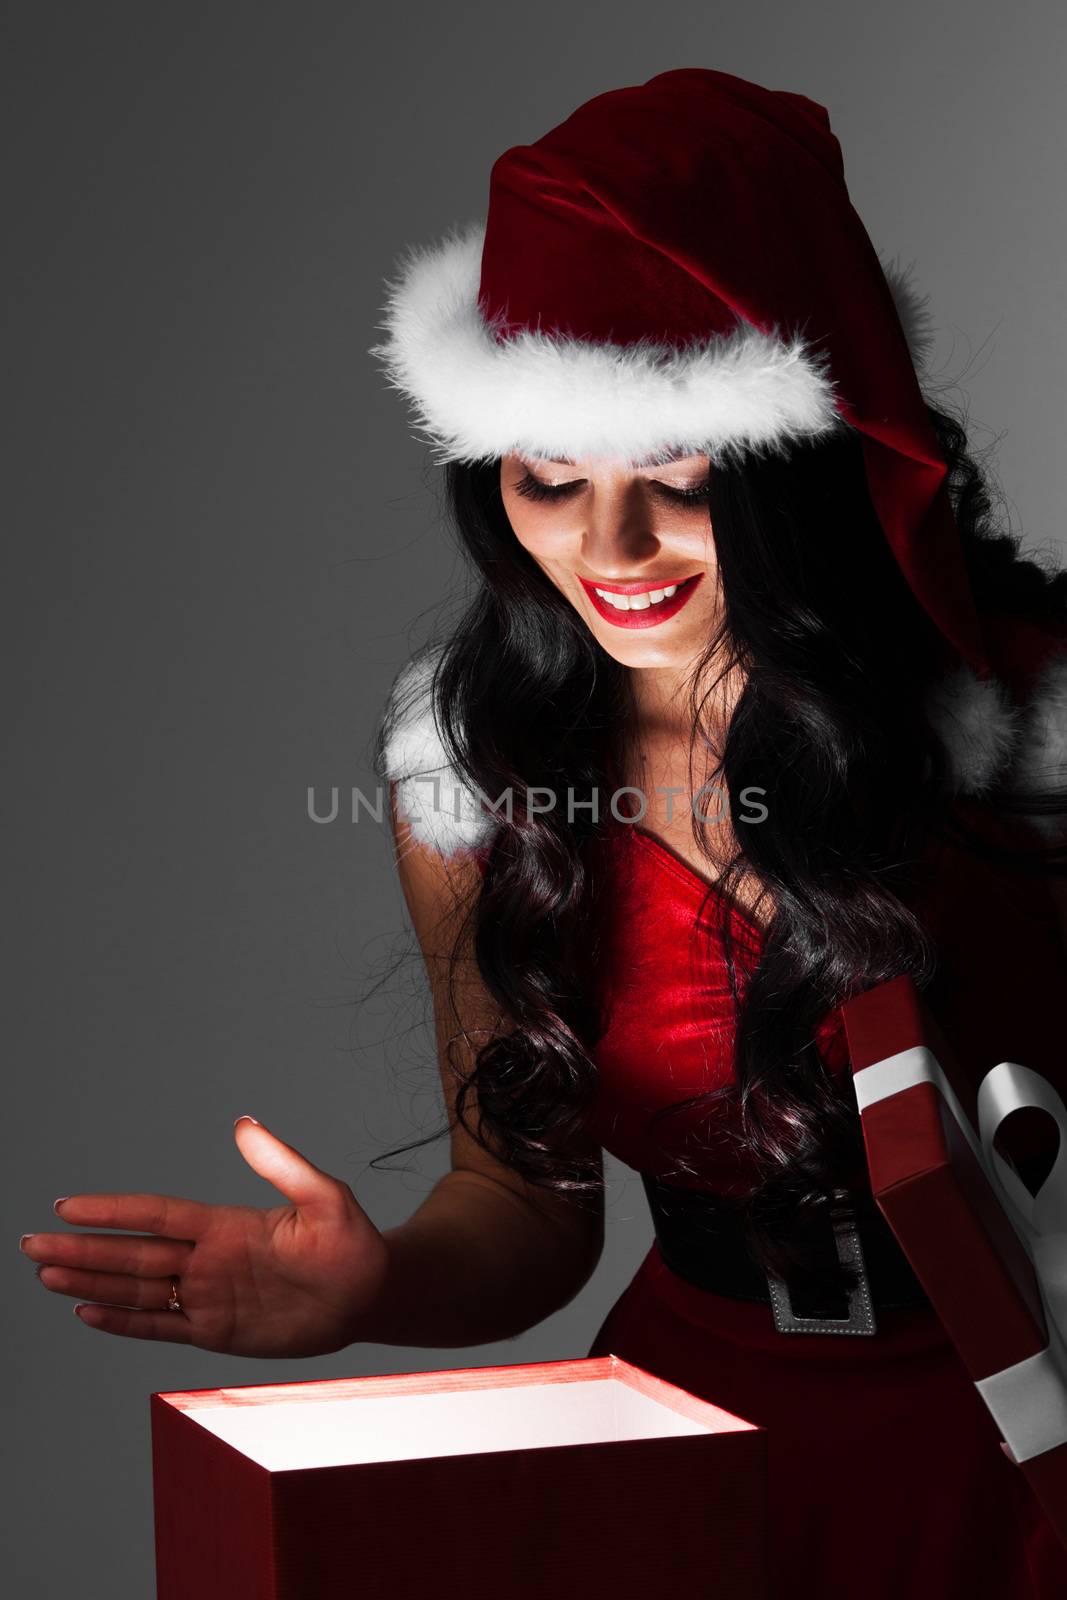 Beautiful santa girl opening glowing magic gift and smiling